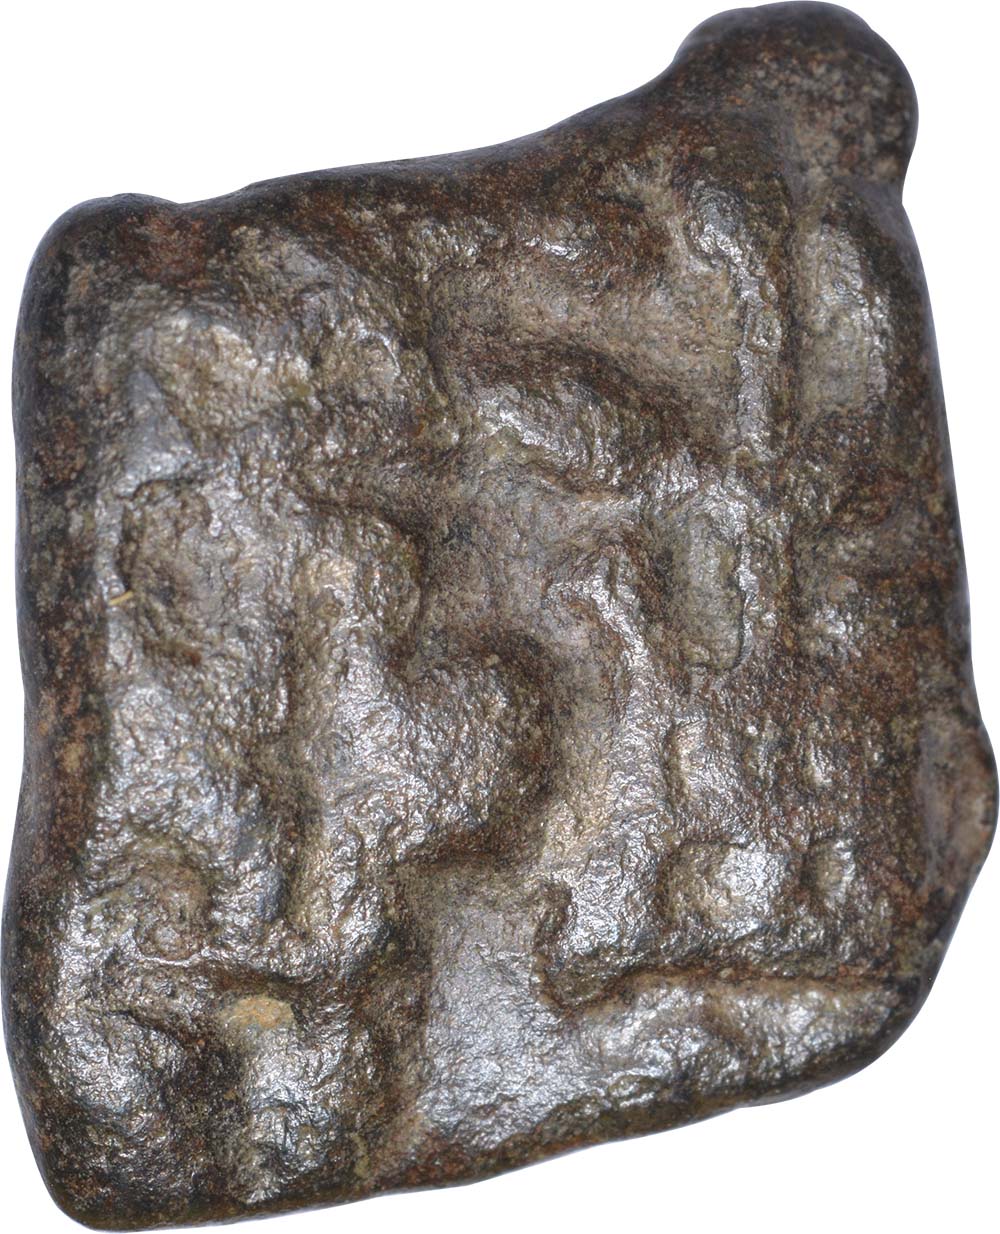 Cast Copper kakani Coin of Sungha Kingdom. "Sunga Kingdom, (150 BC-100 AD), Cast Copper Kakani coin, - Image 2 of 2